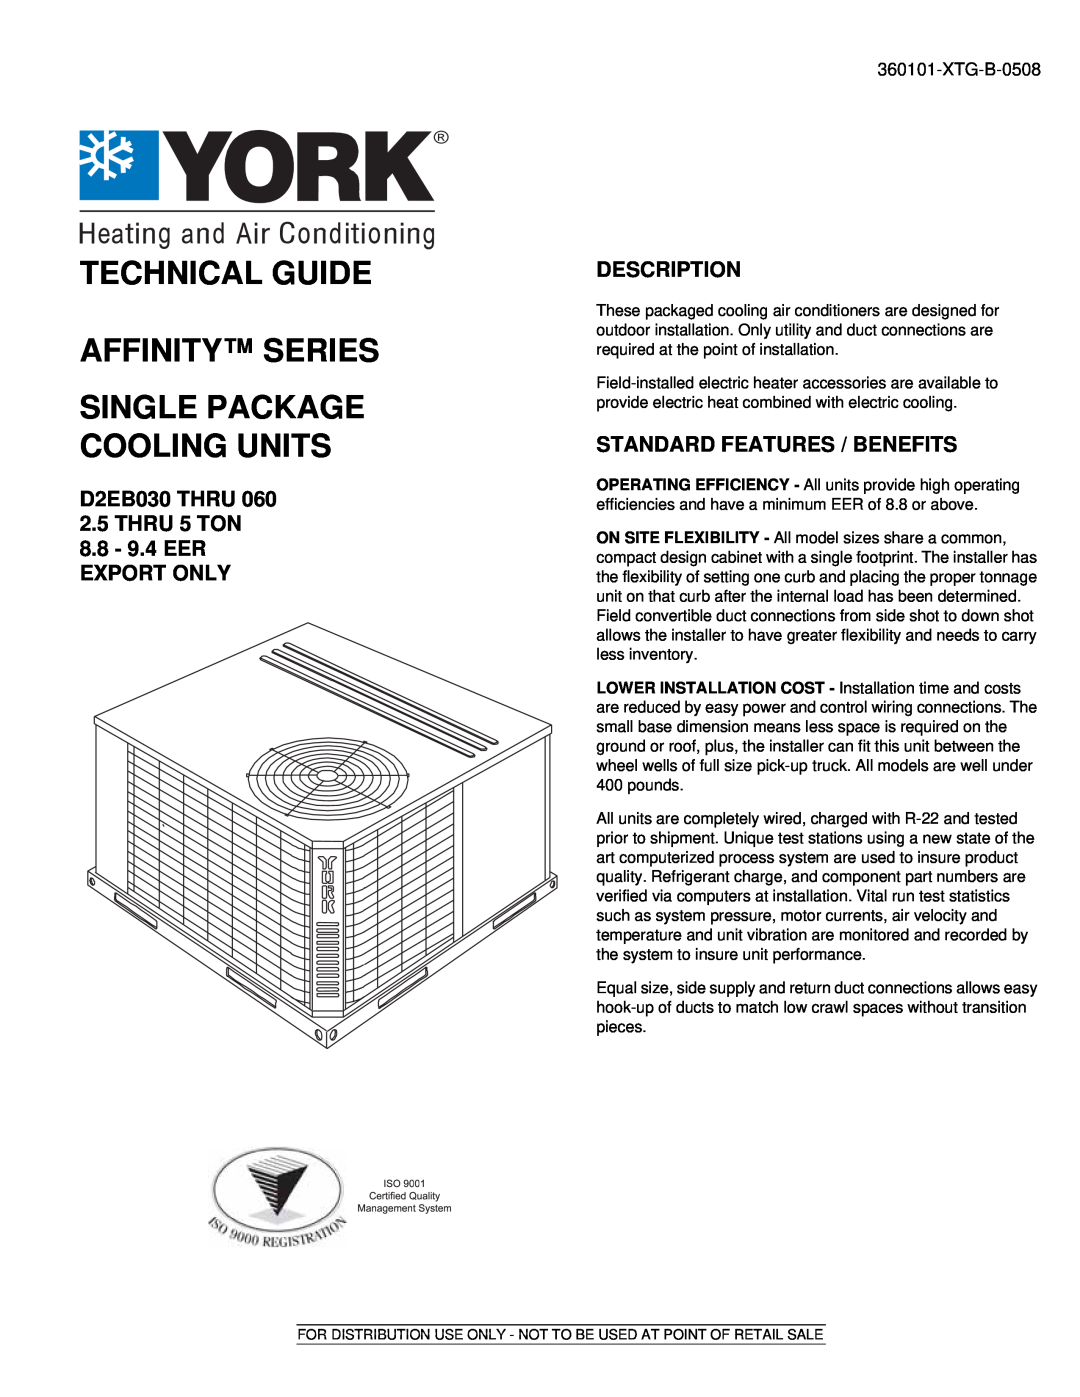 York manual D2EB030 THRU 2.5 THRU 5 TON 8.8 - 9.4 EER EXPORT ONLY, Description, Standard Features / Benefits 